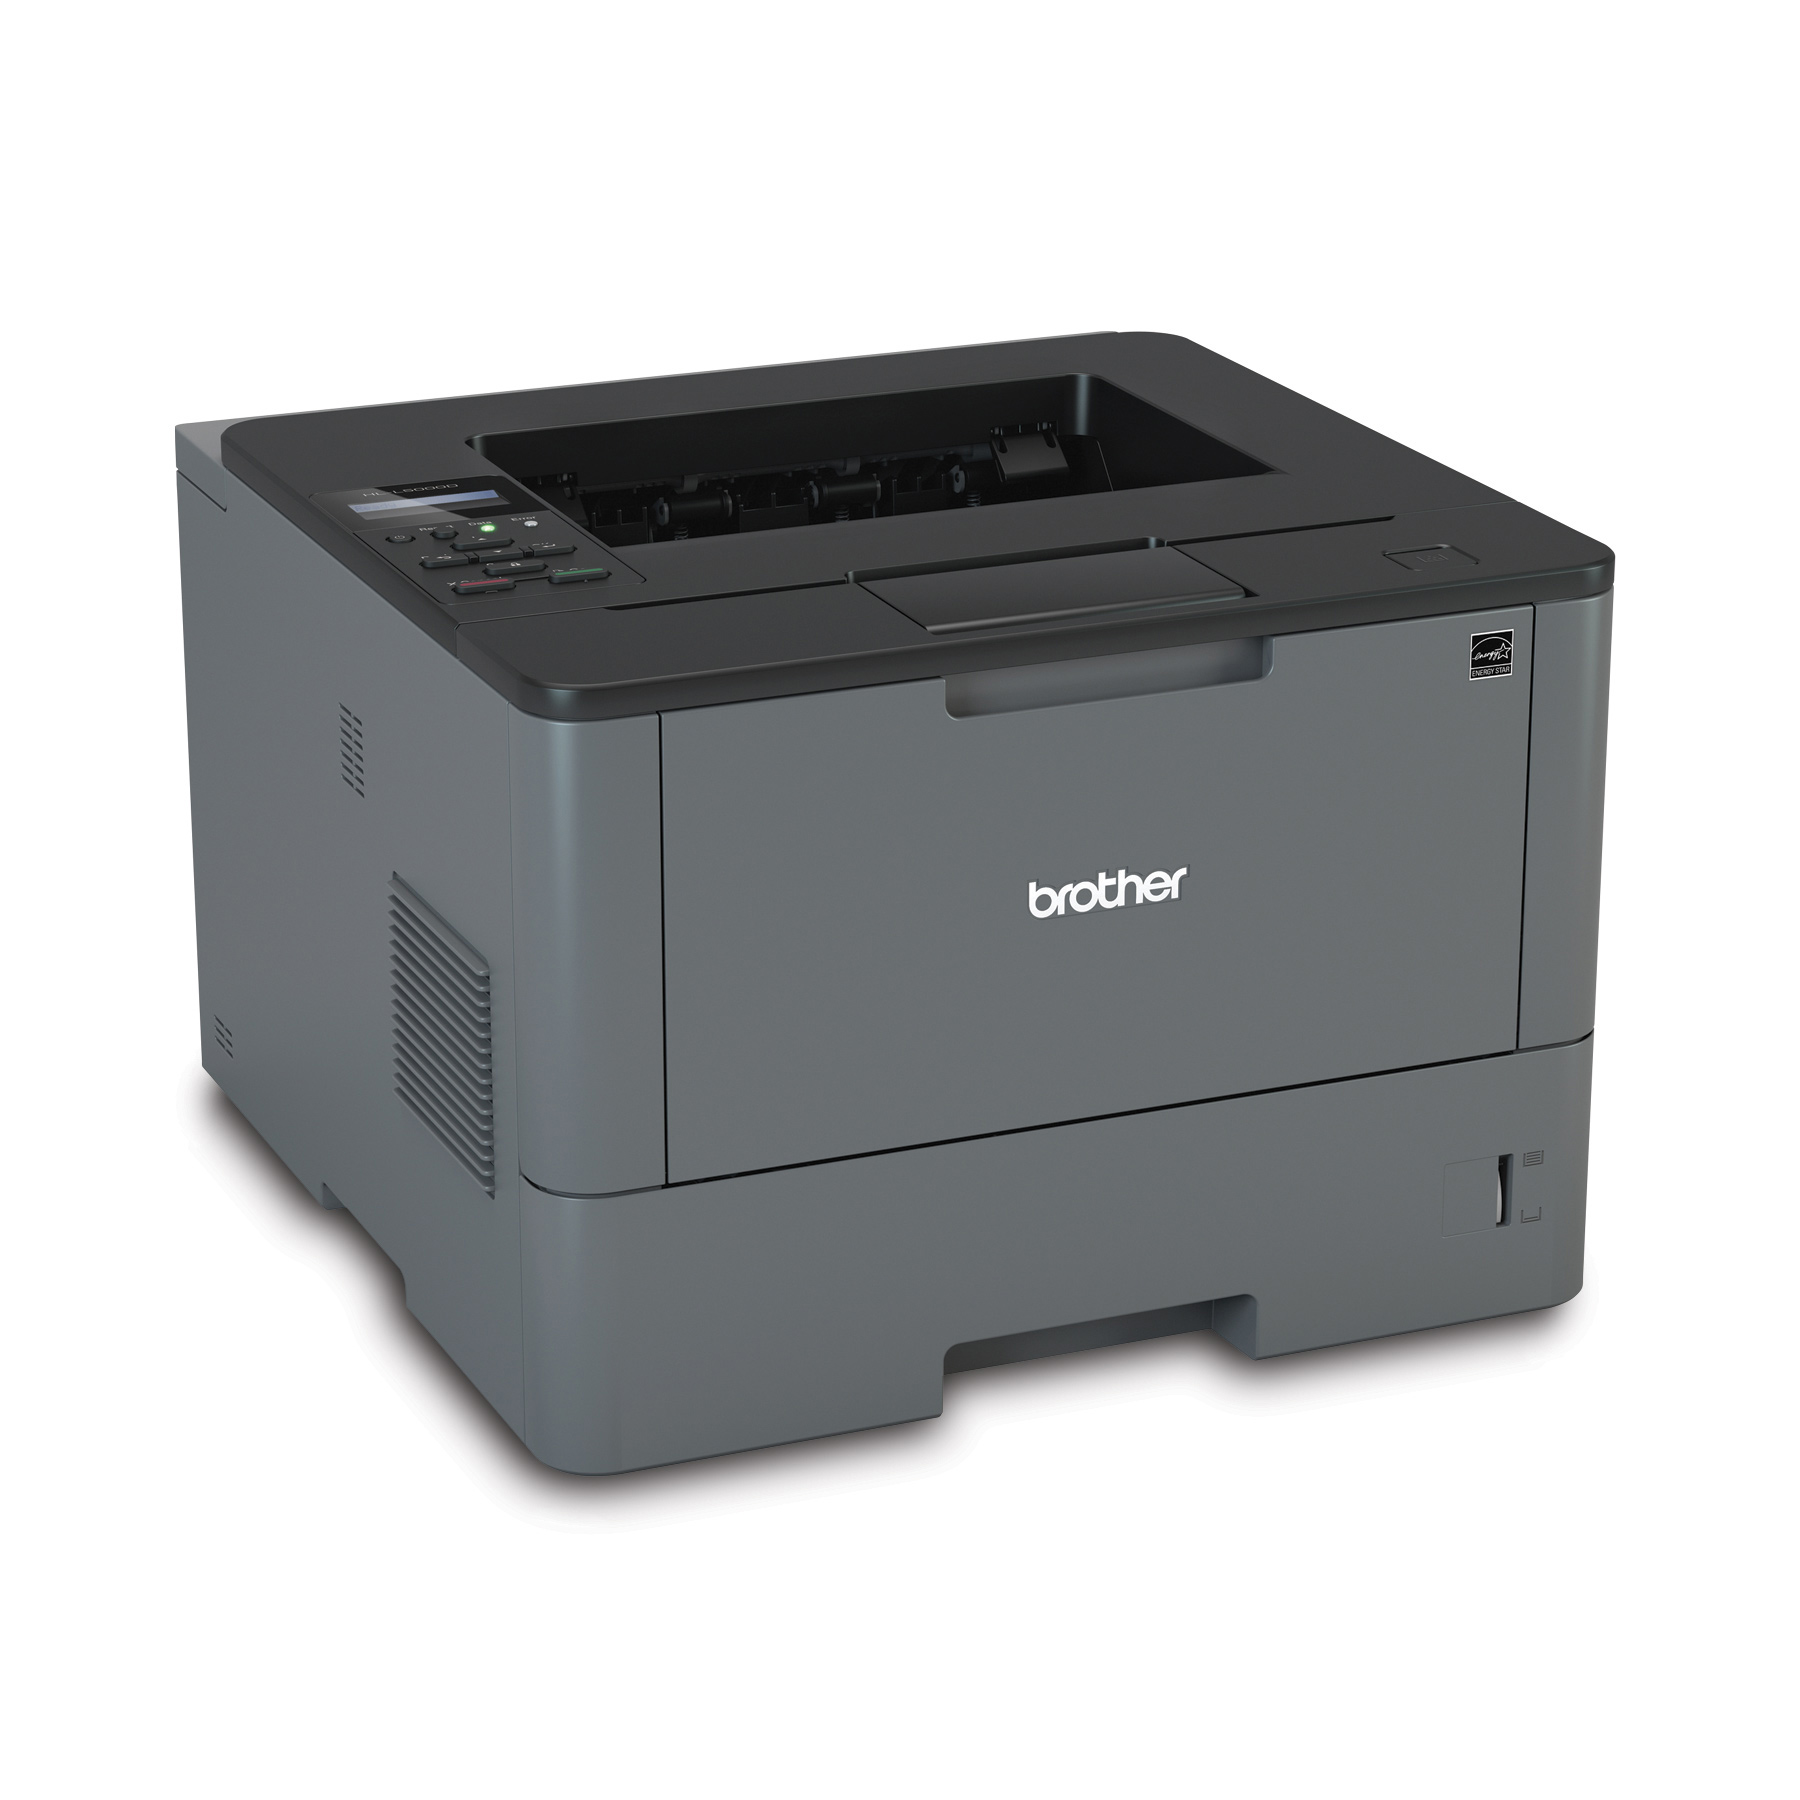 Brother Printer LT6500 Tray 